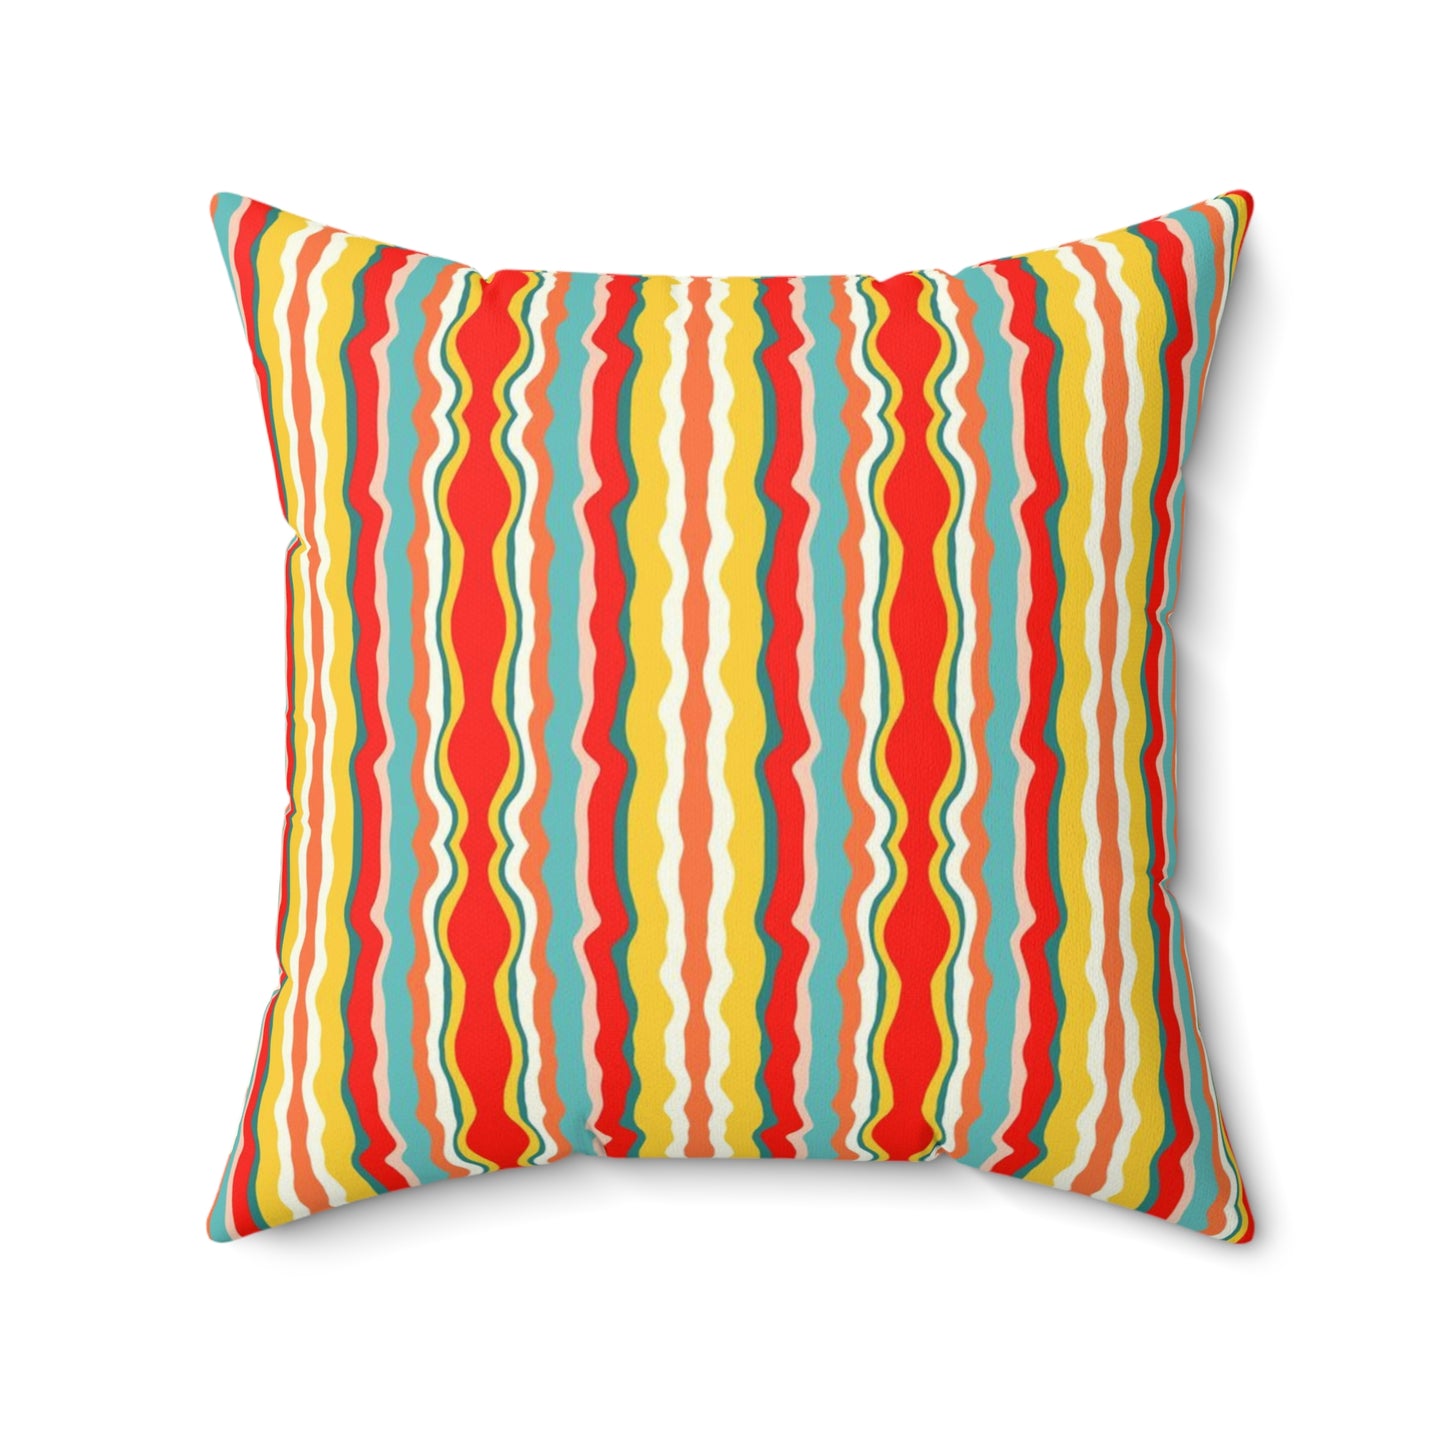 Groovy Stripes Spun Polyester Square Pillow